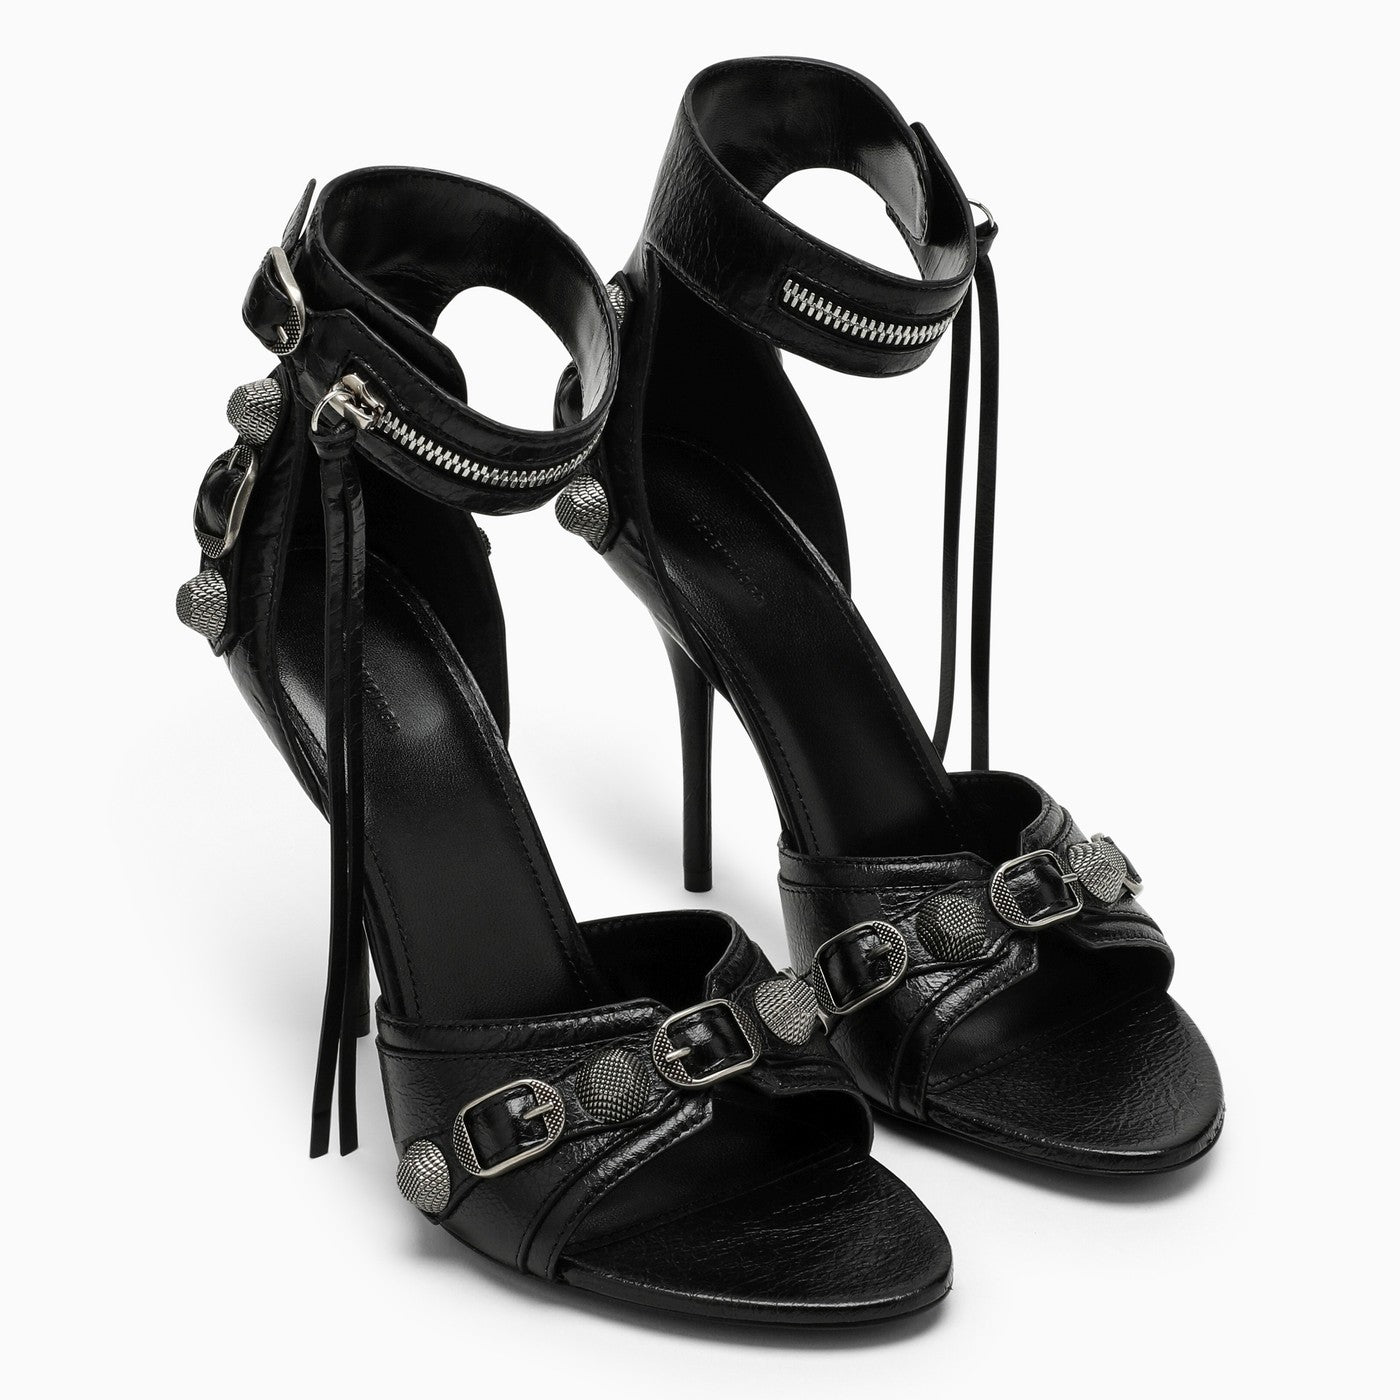 Gucci x Balenciaga Leather Heels